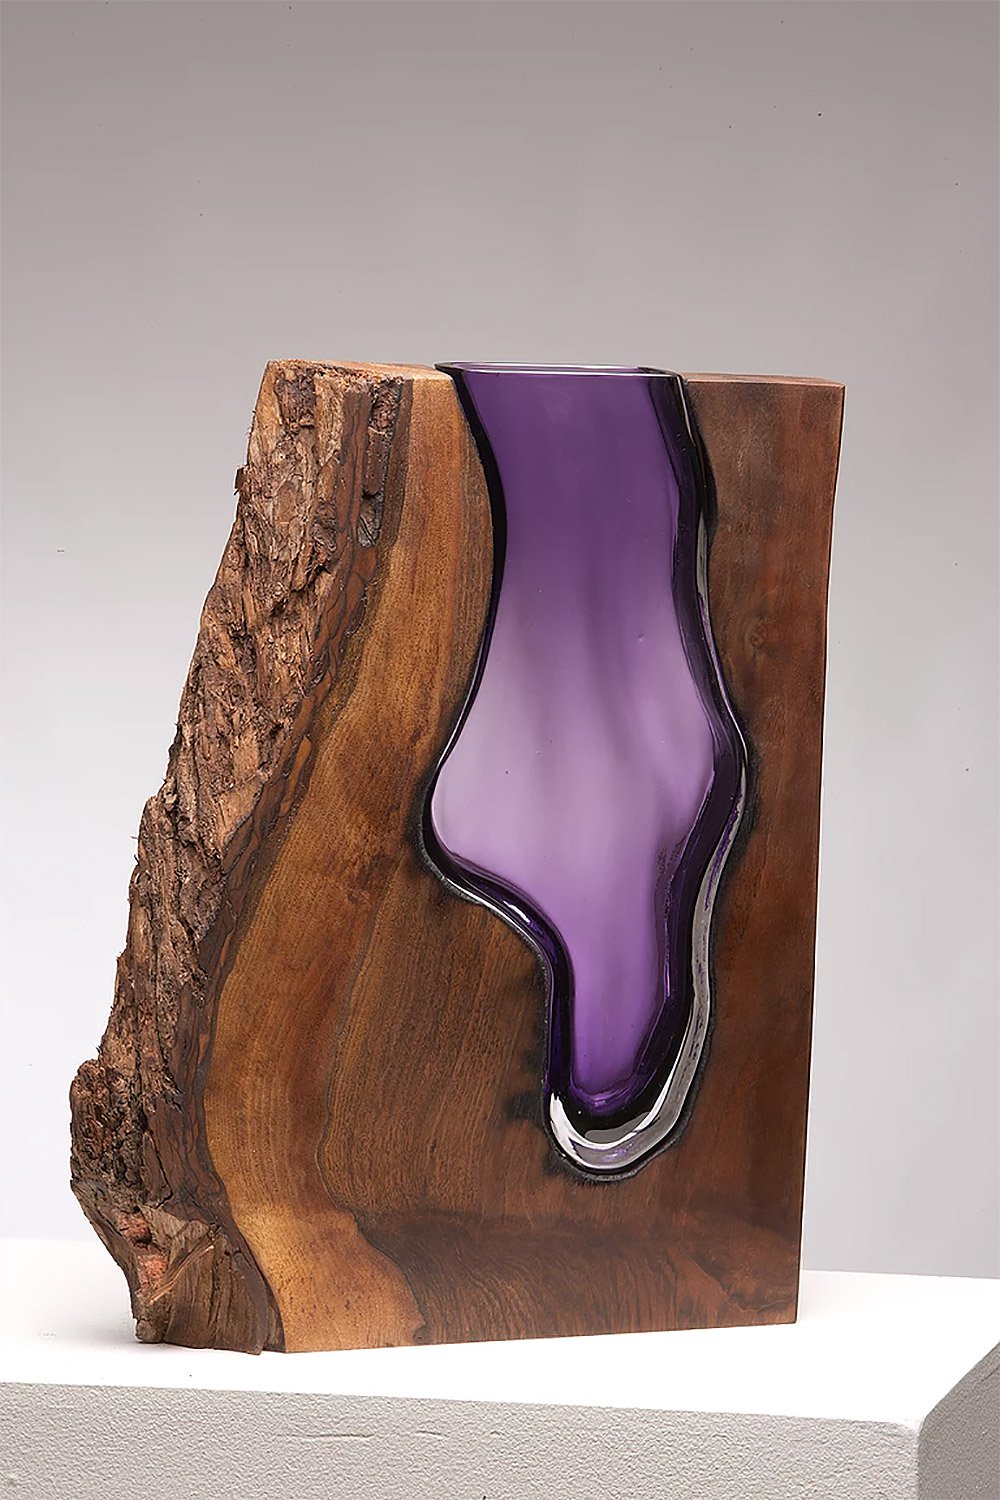 fubiz-wood-glass-sculpture-scott-slagerman-03